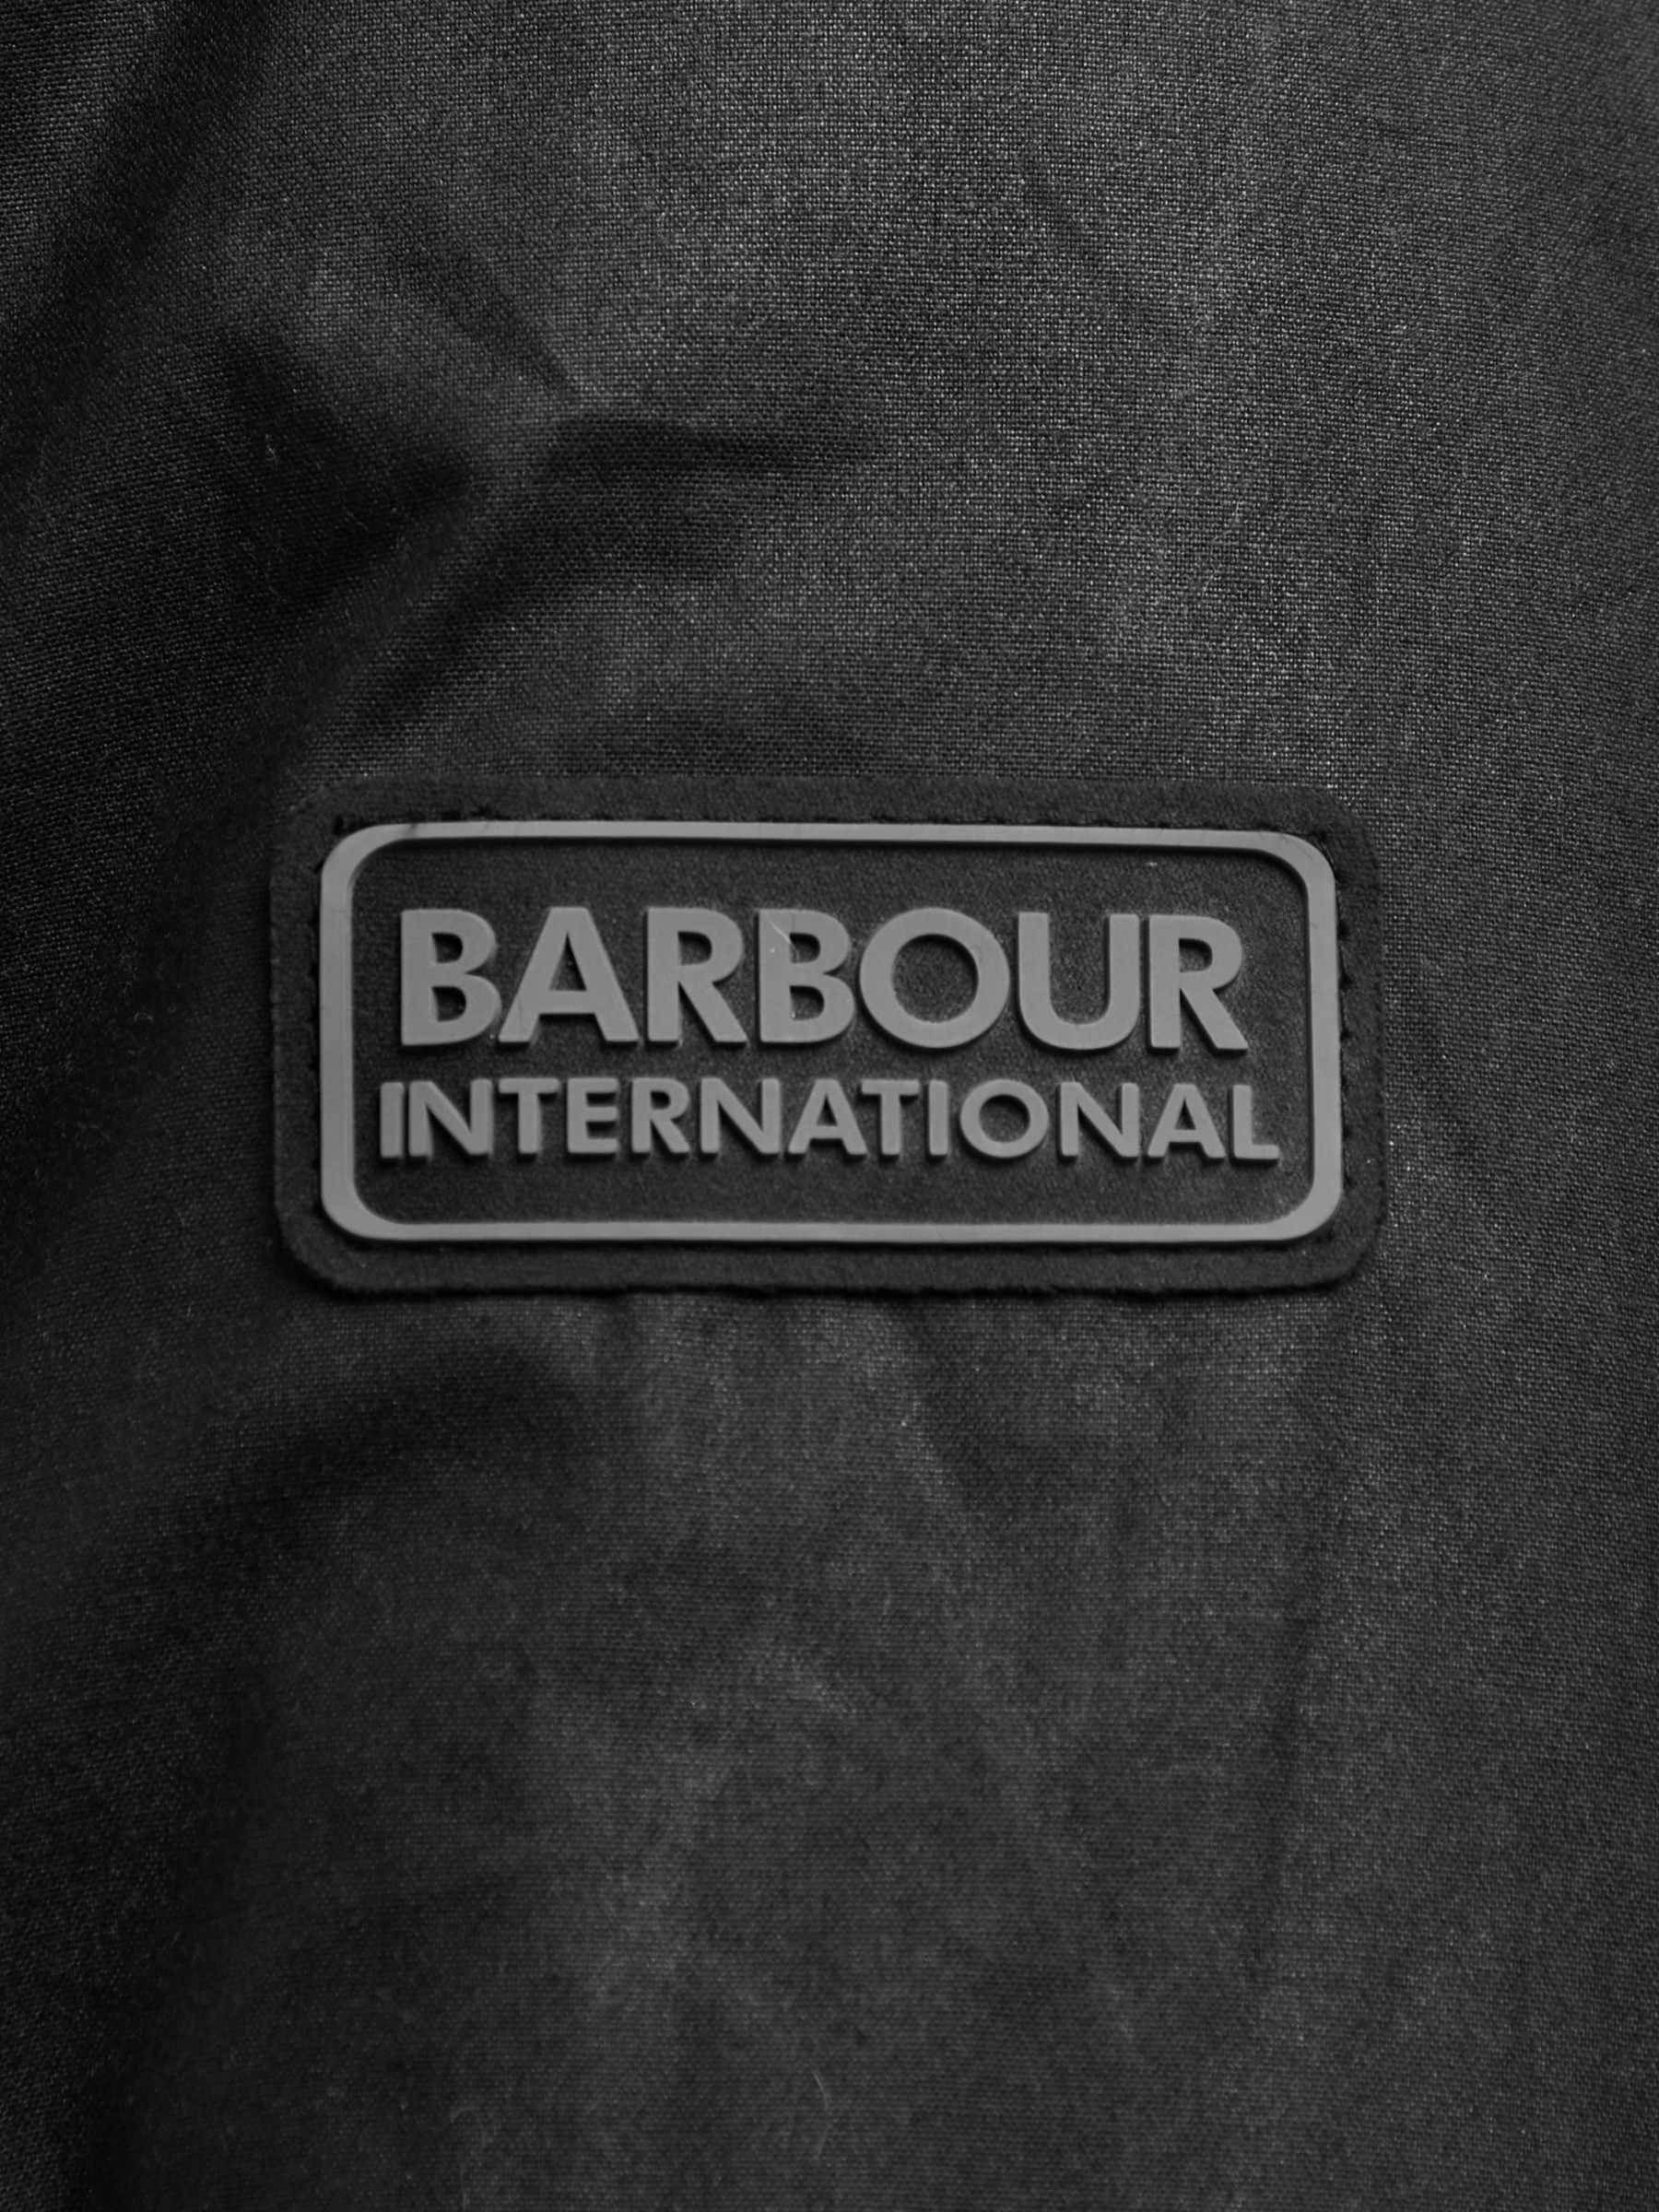 Barbour International Tourer Duke Waxed Jacket, Black, S